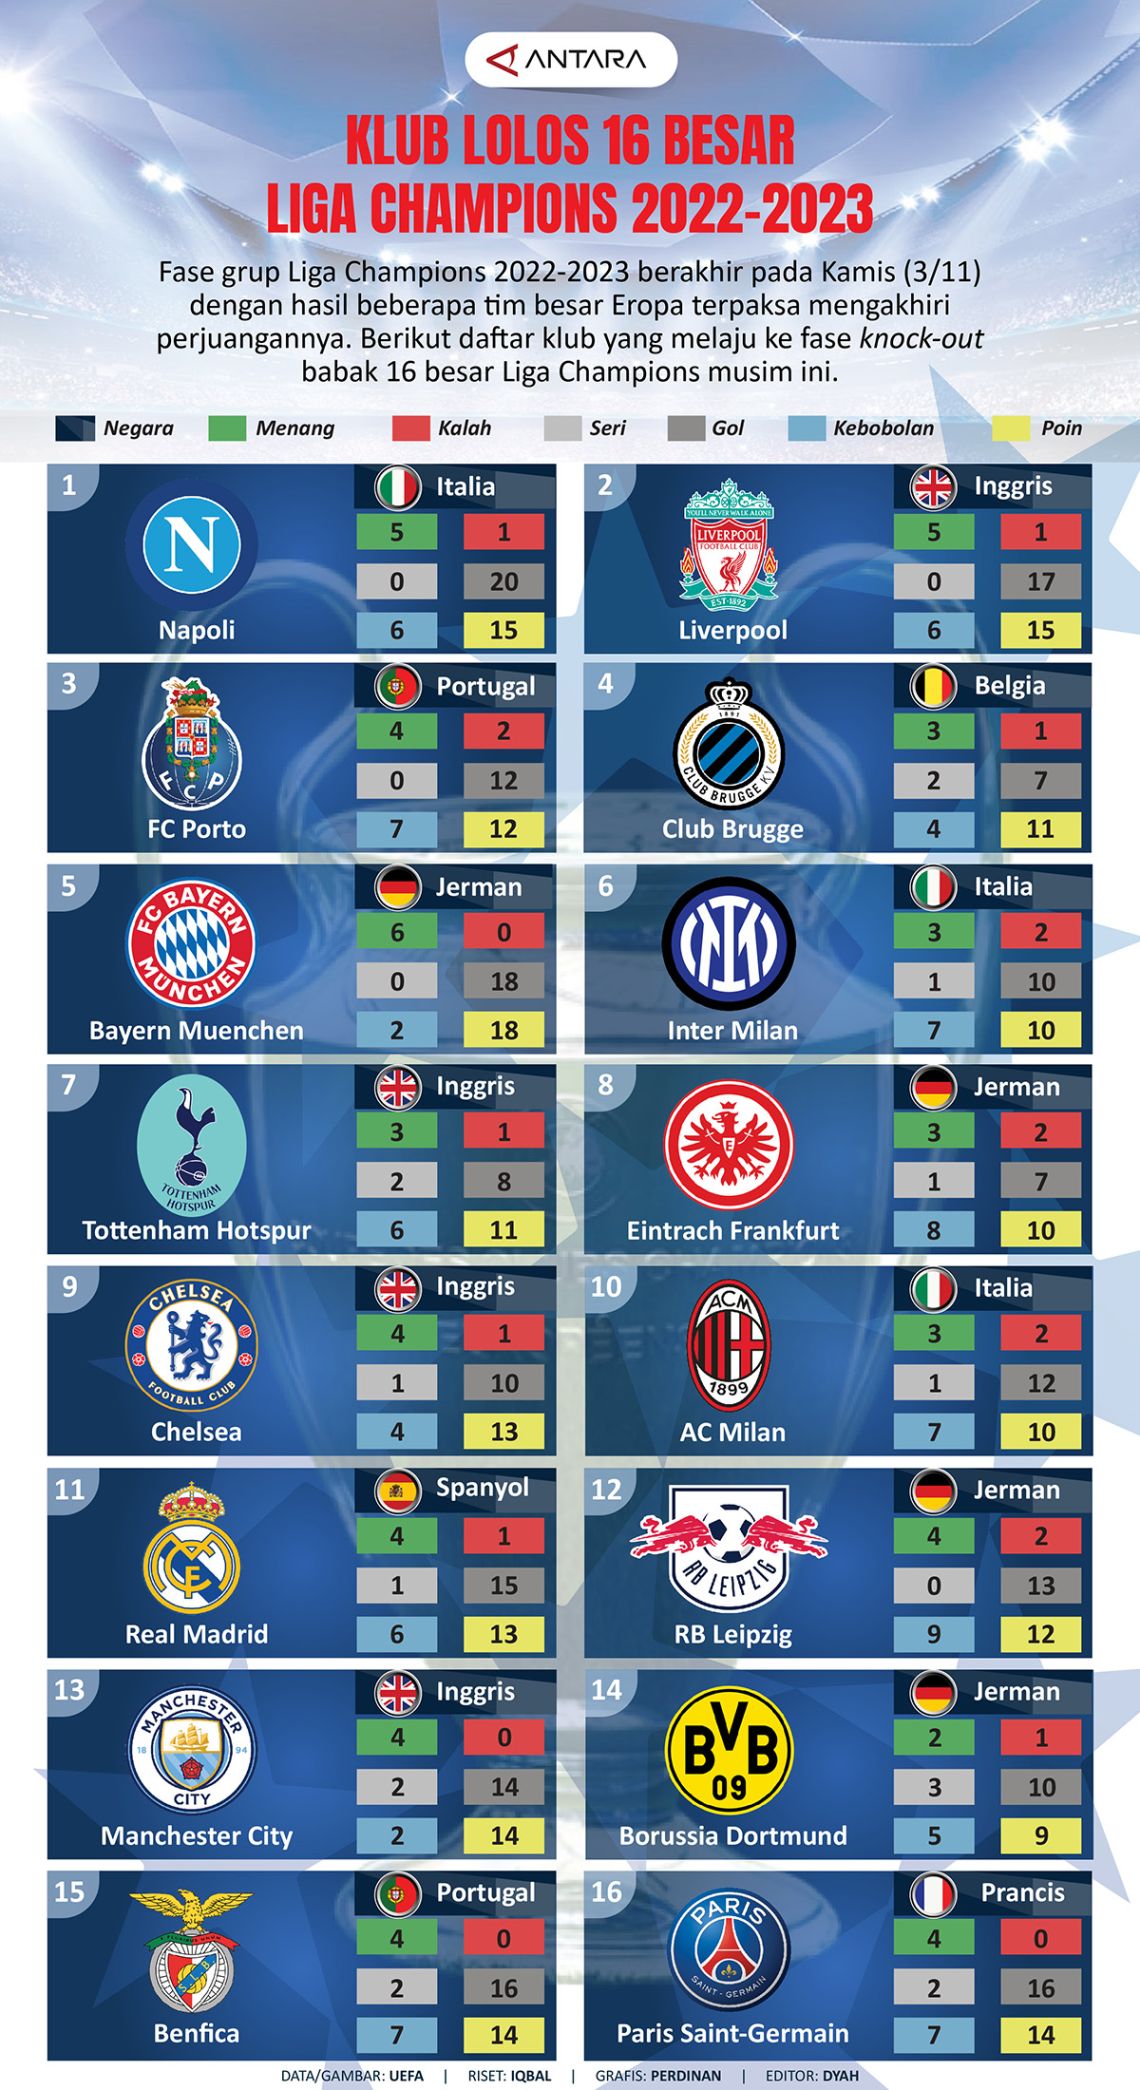 Klub lolos 16 besar Liga Champions 2022